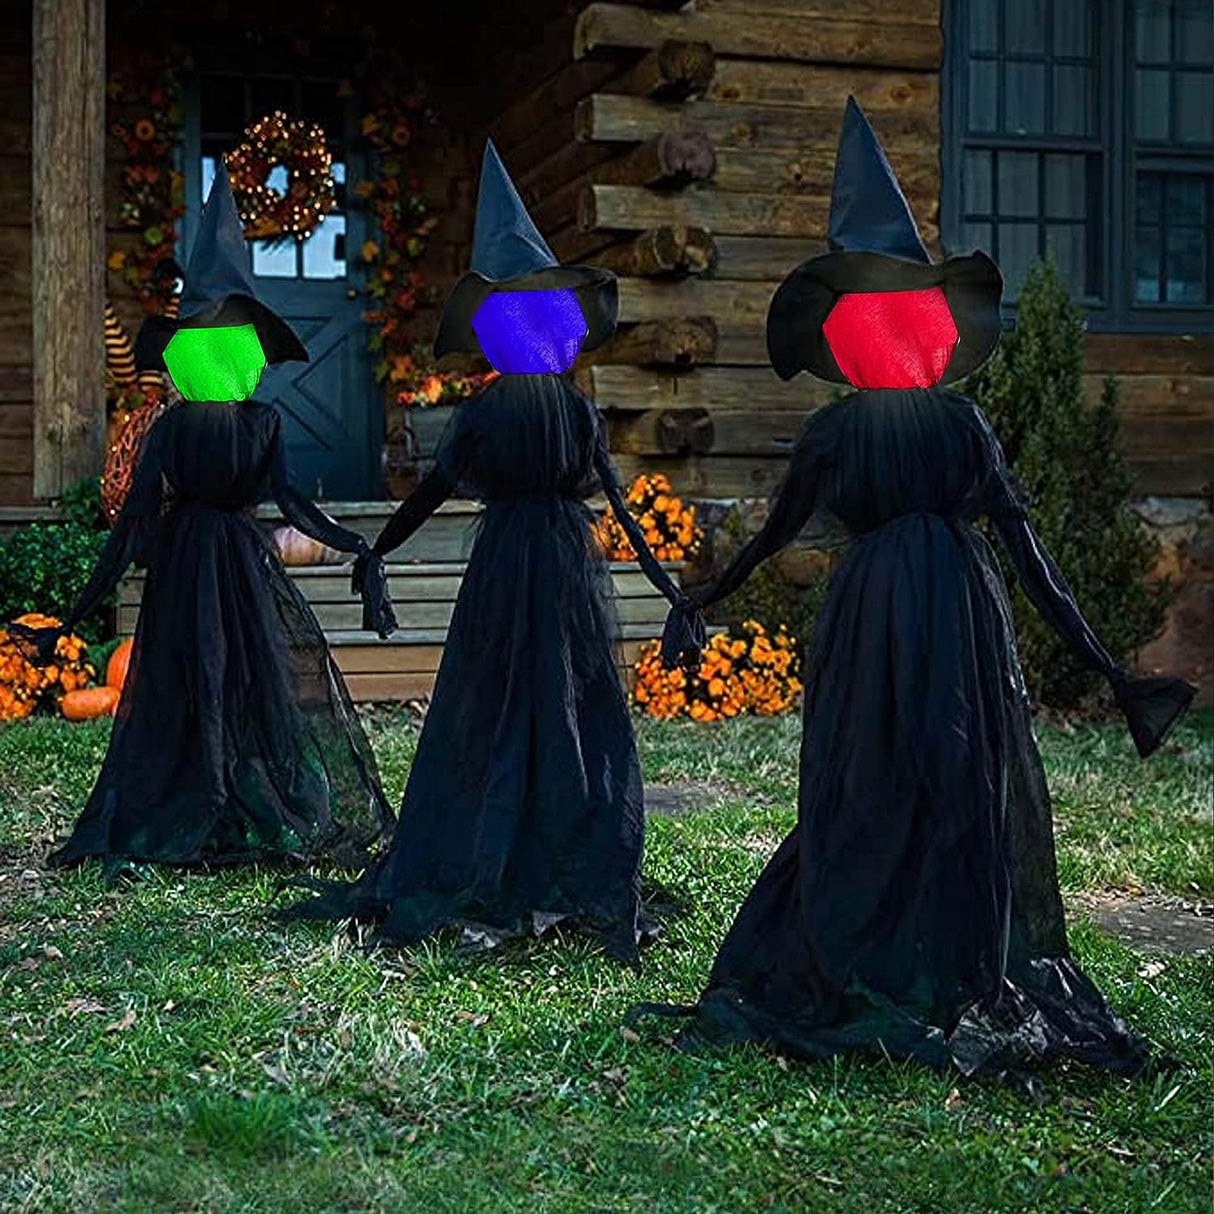 Halloween Decorations, 6 FT Set of 3 Light up Halloween Witch with Stakes, Witch Decorations for Outdoor Garden Yard Lawn Haunted House Decor